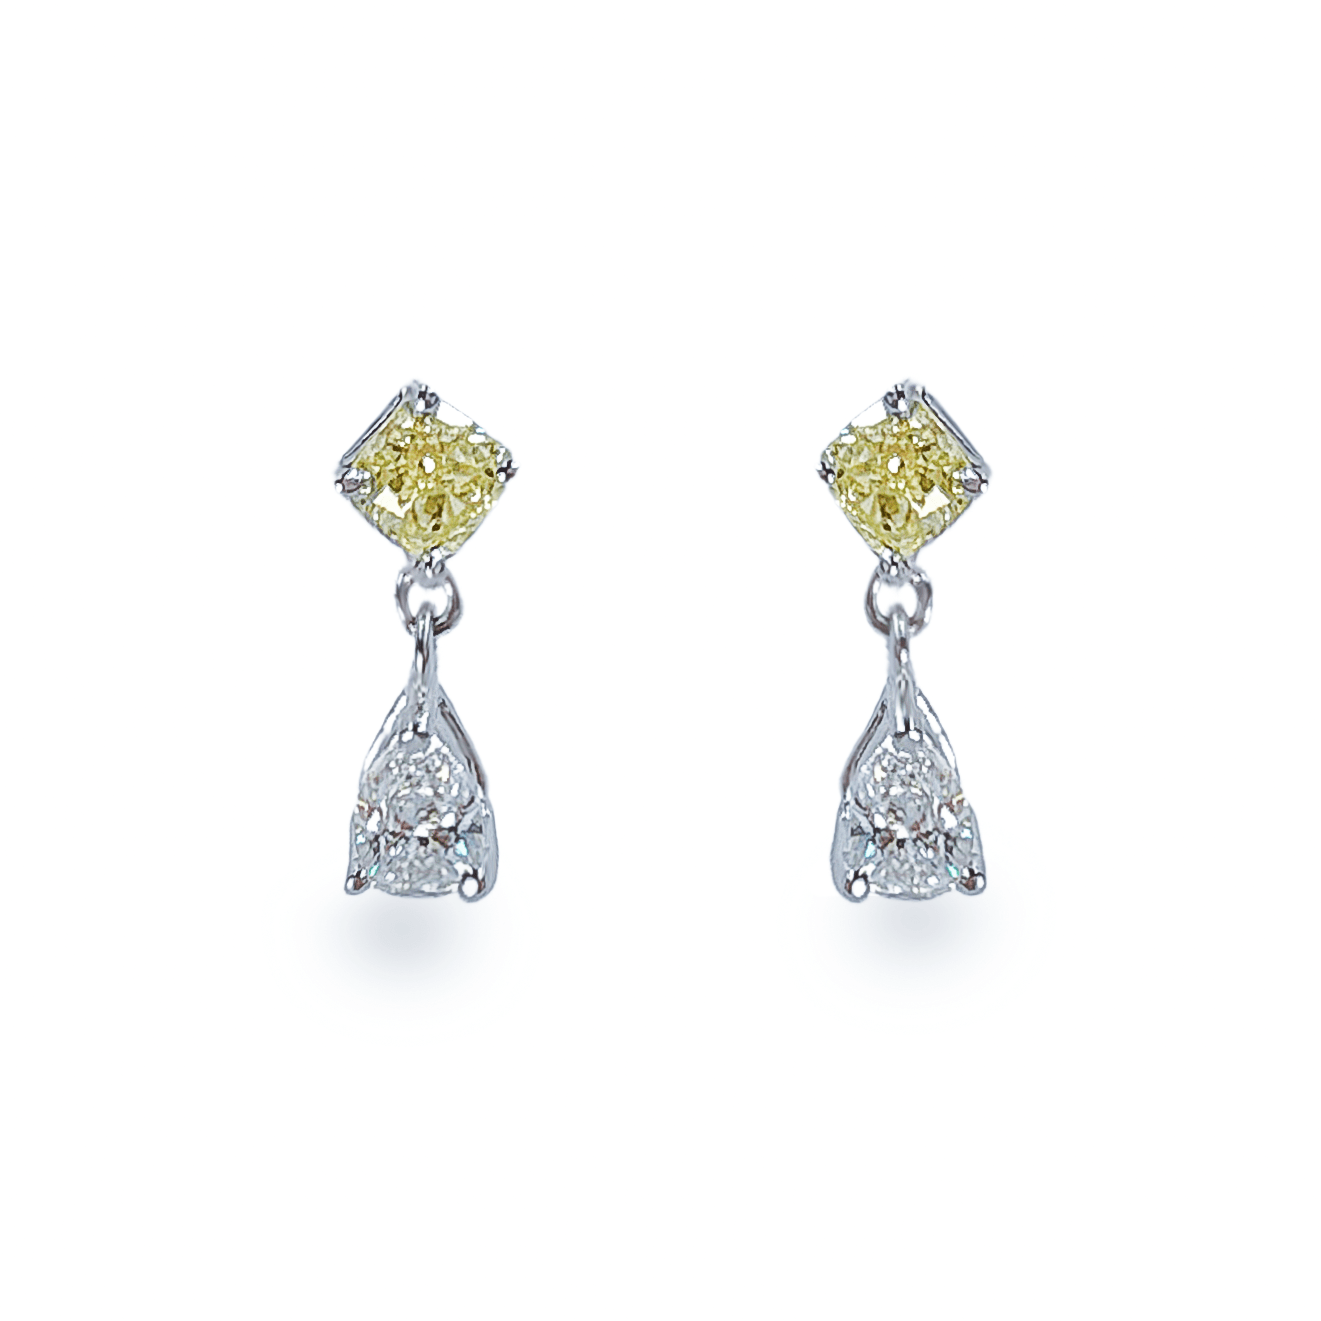 Yellow Cushion and White Pear Diamond Earrings - أقراط - Luxury Diamond Jewelry shop Dubai - SABA DIAMONDS